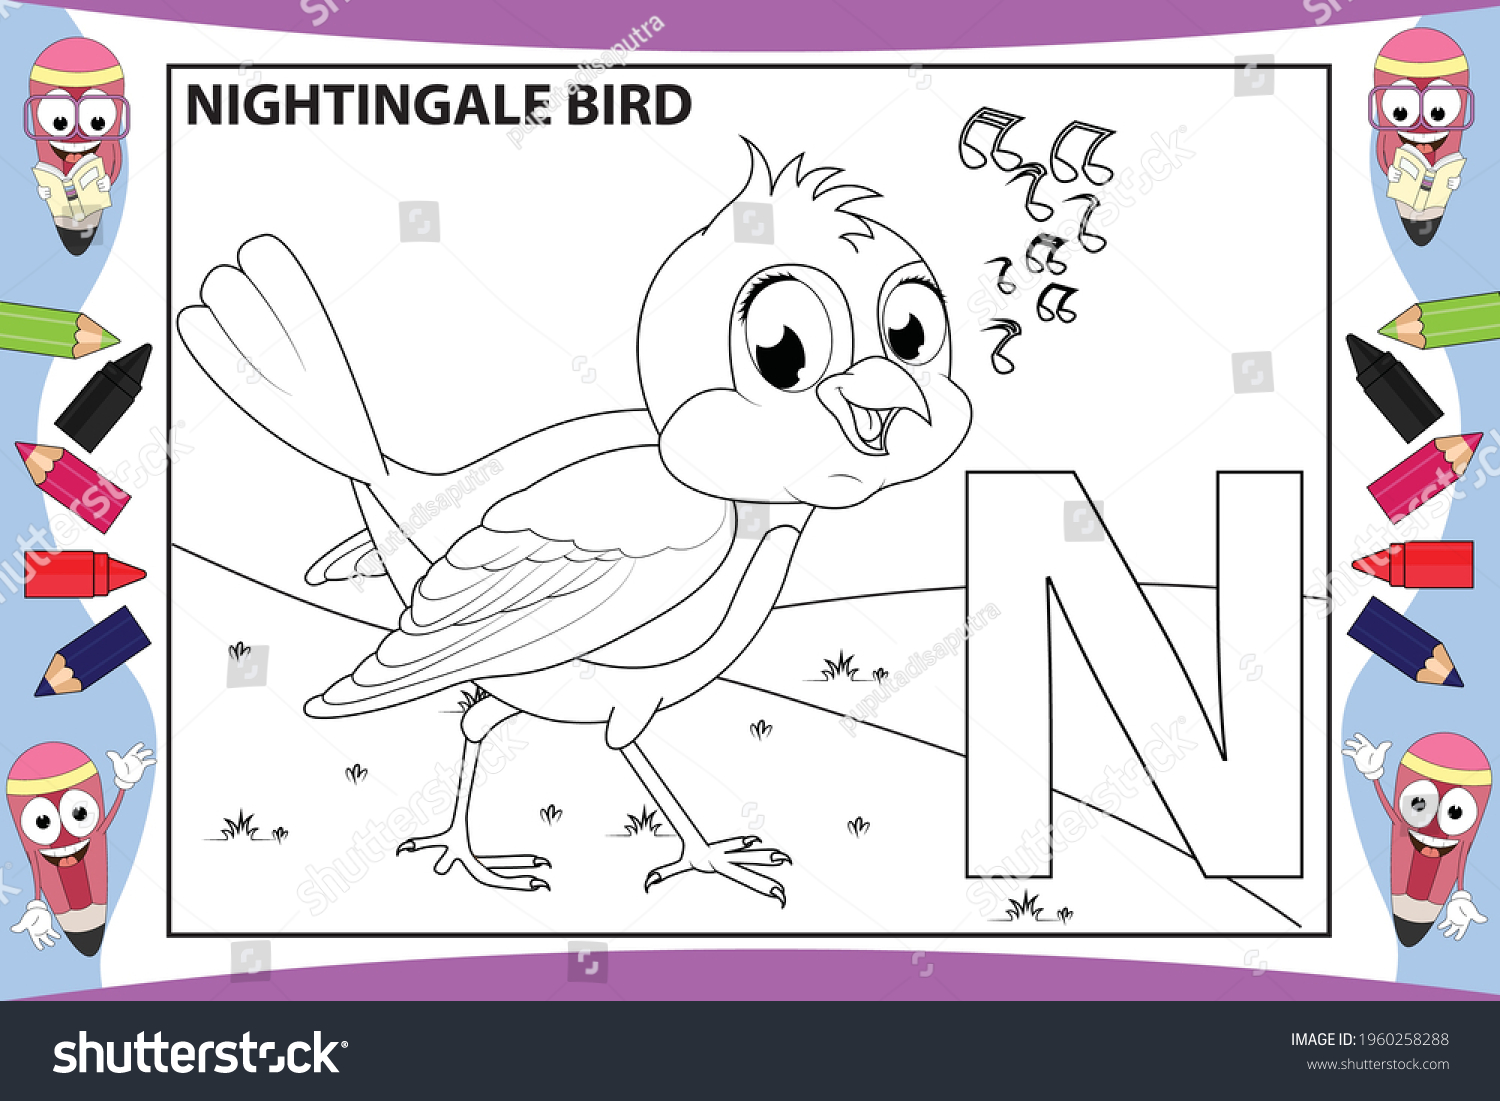 Coloring cute nightingale bird animal cartoon stock vector royalty free